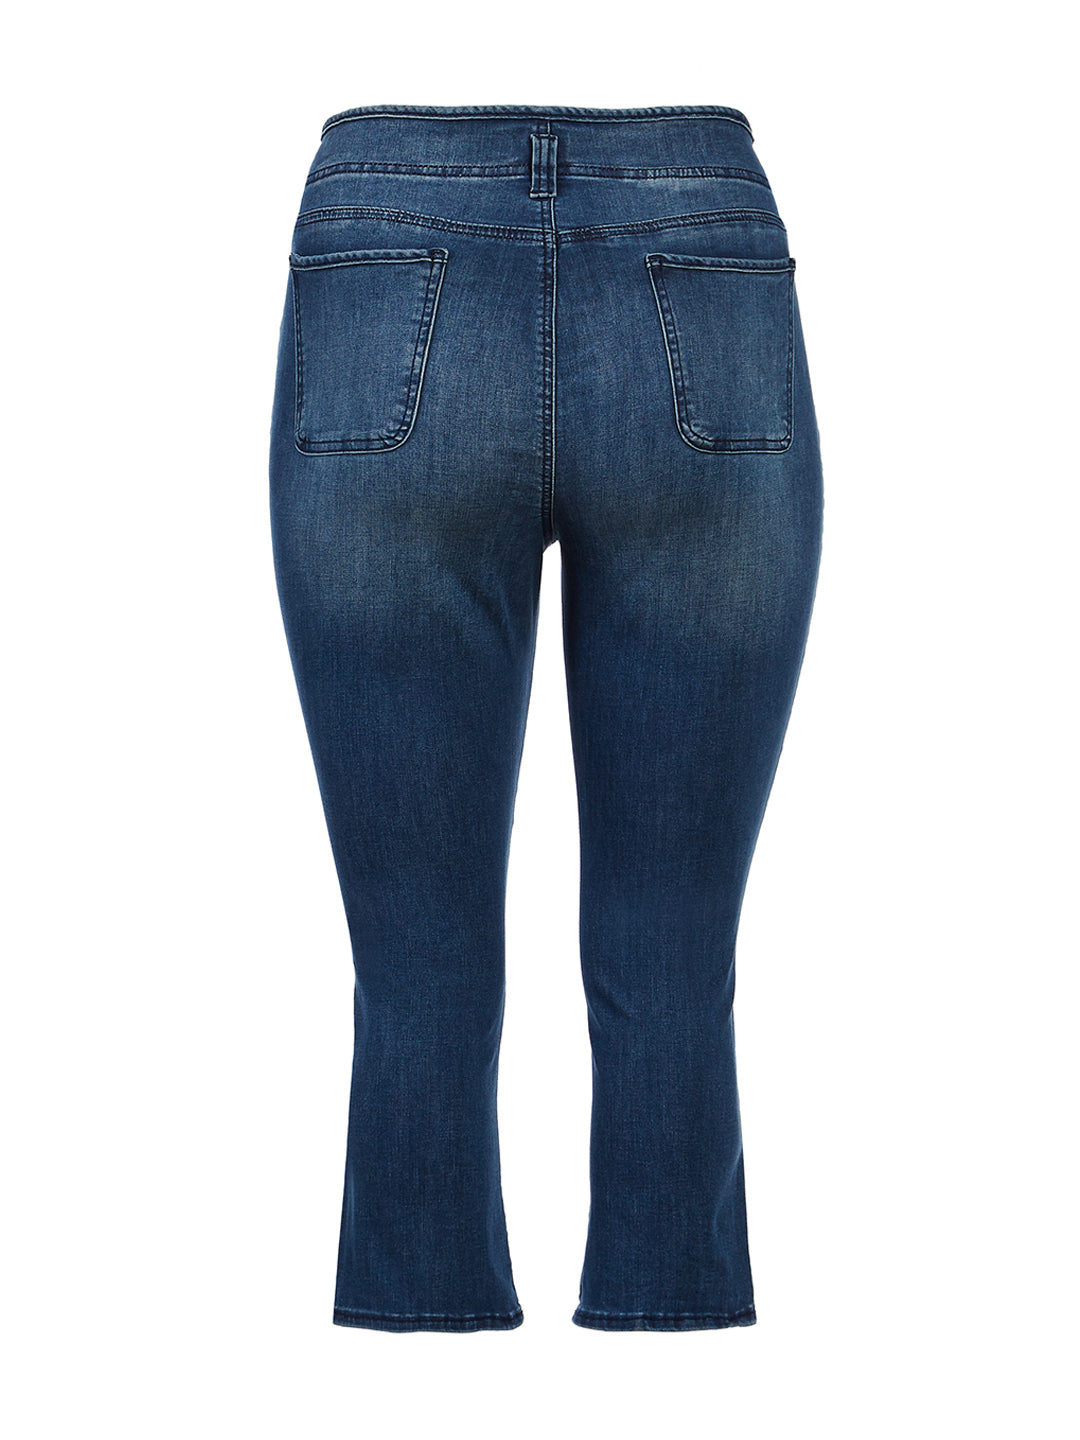 Caliente Wash Ami Skinny Capri Jeans, NYDJ